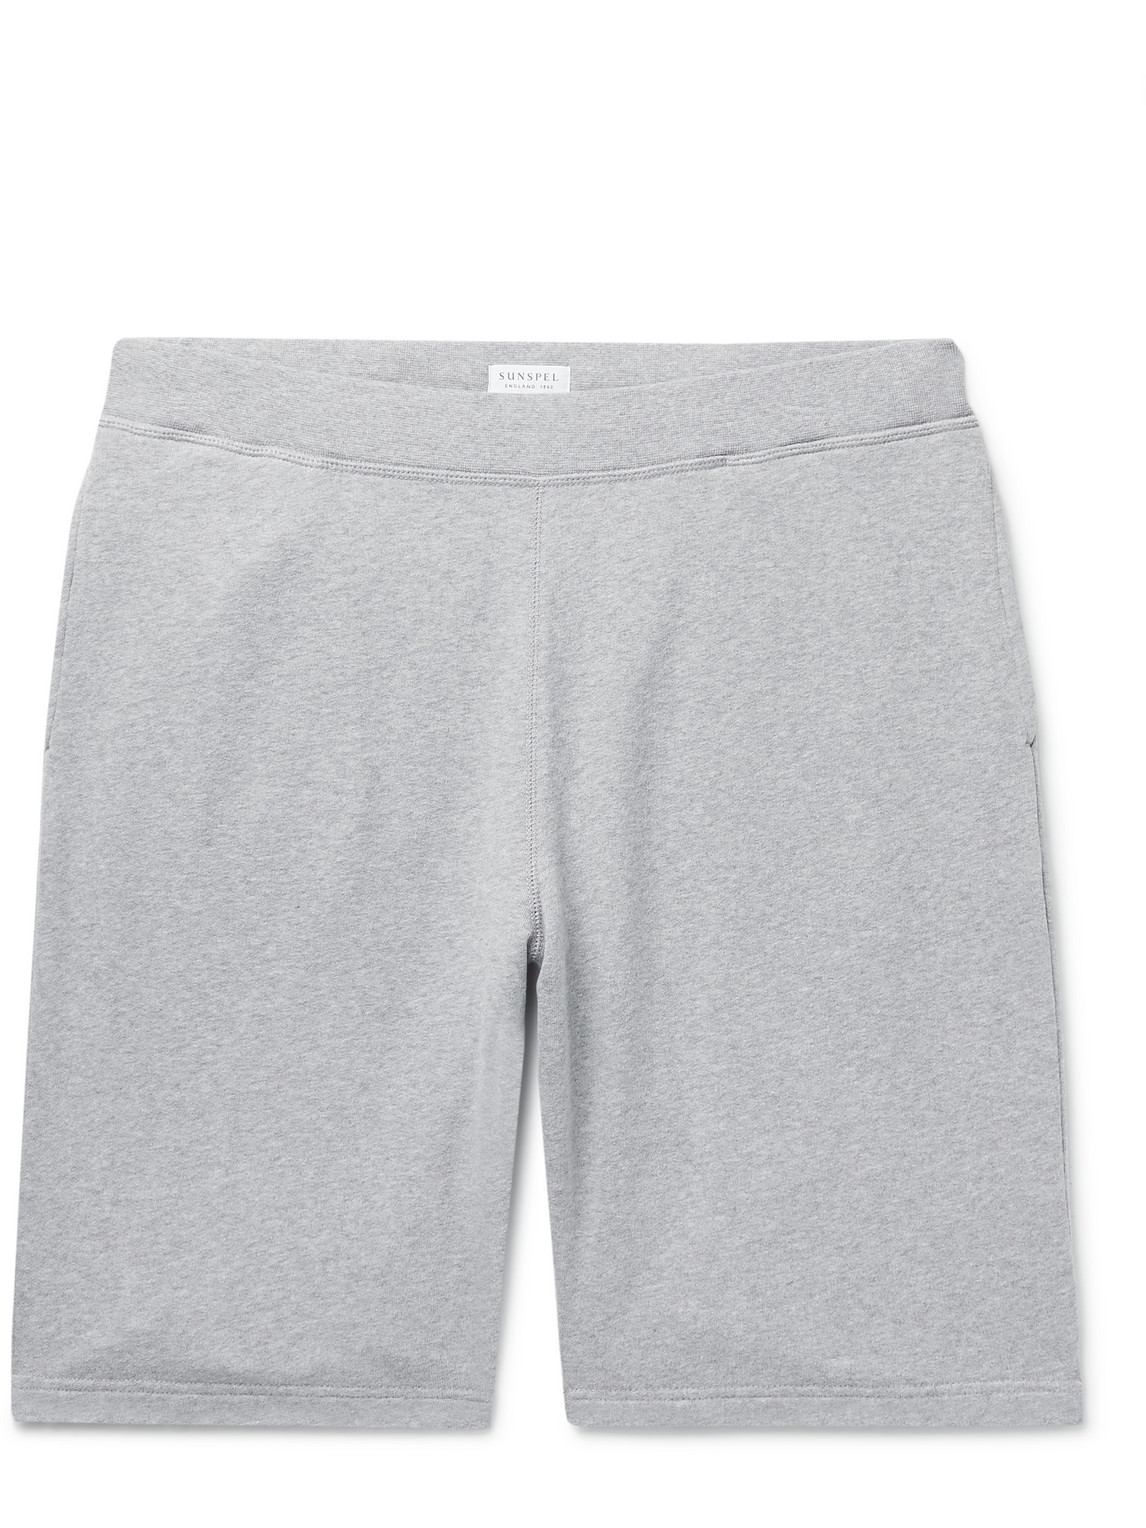 sunspel - cotton-jersey shorts - men - gray - s